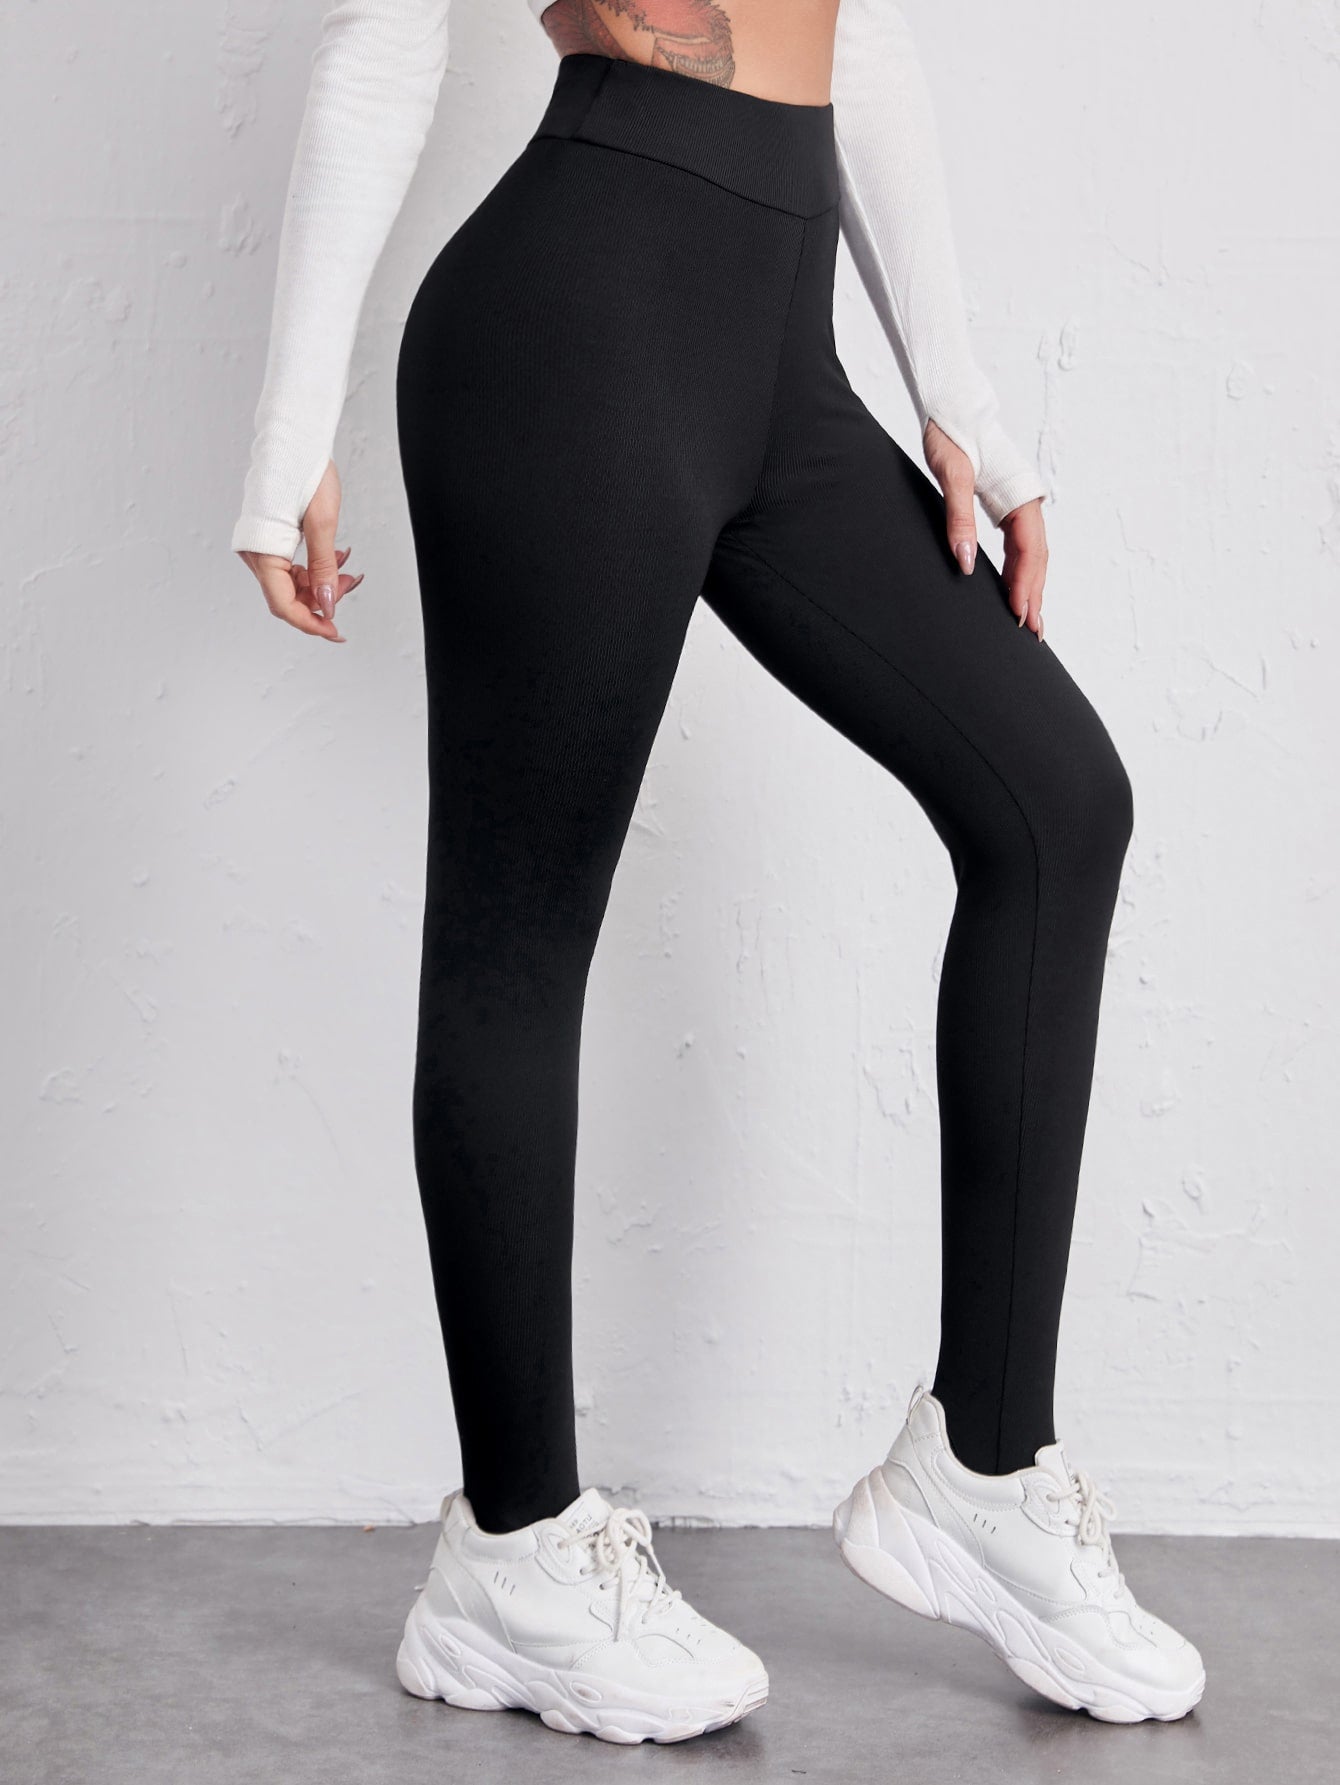 Grey marled activewear gym leggings Seamless high... - Depop